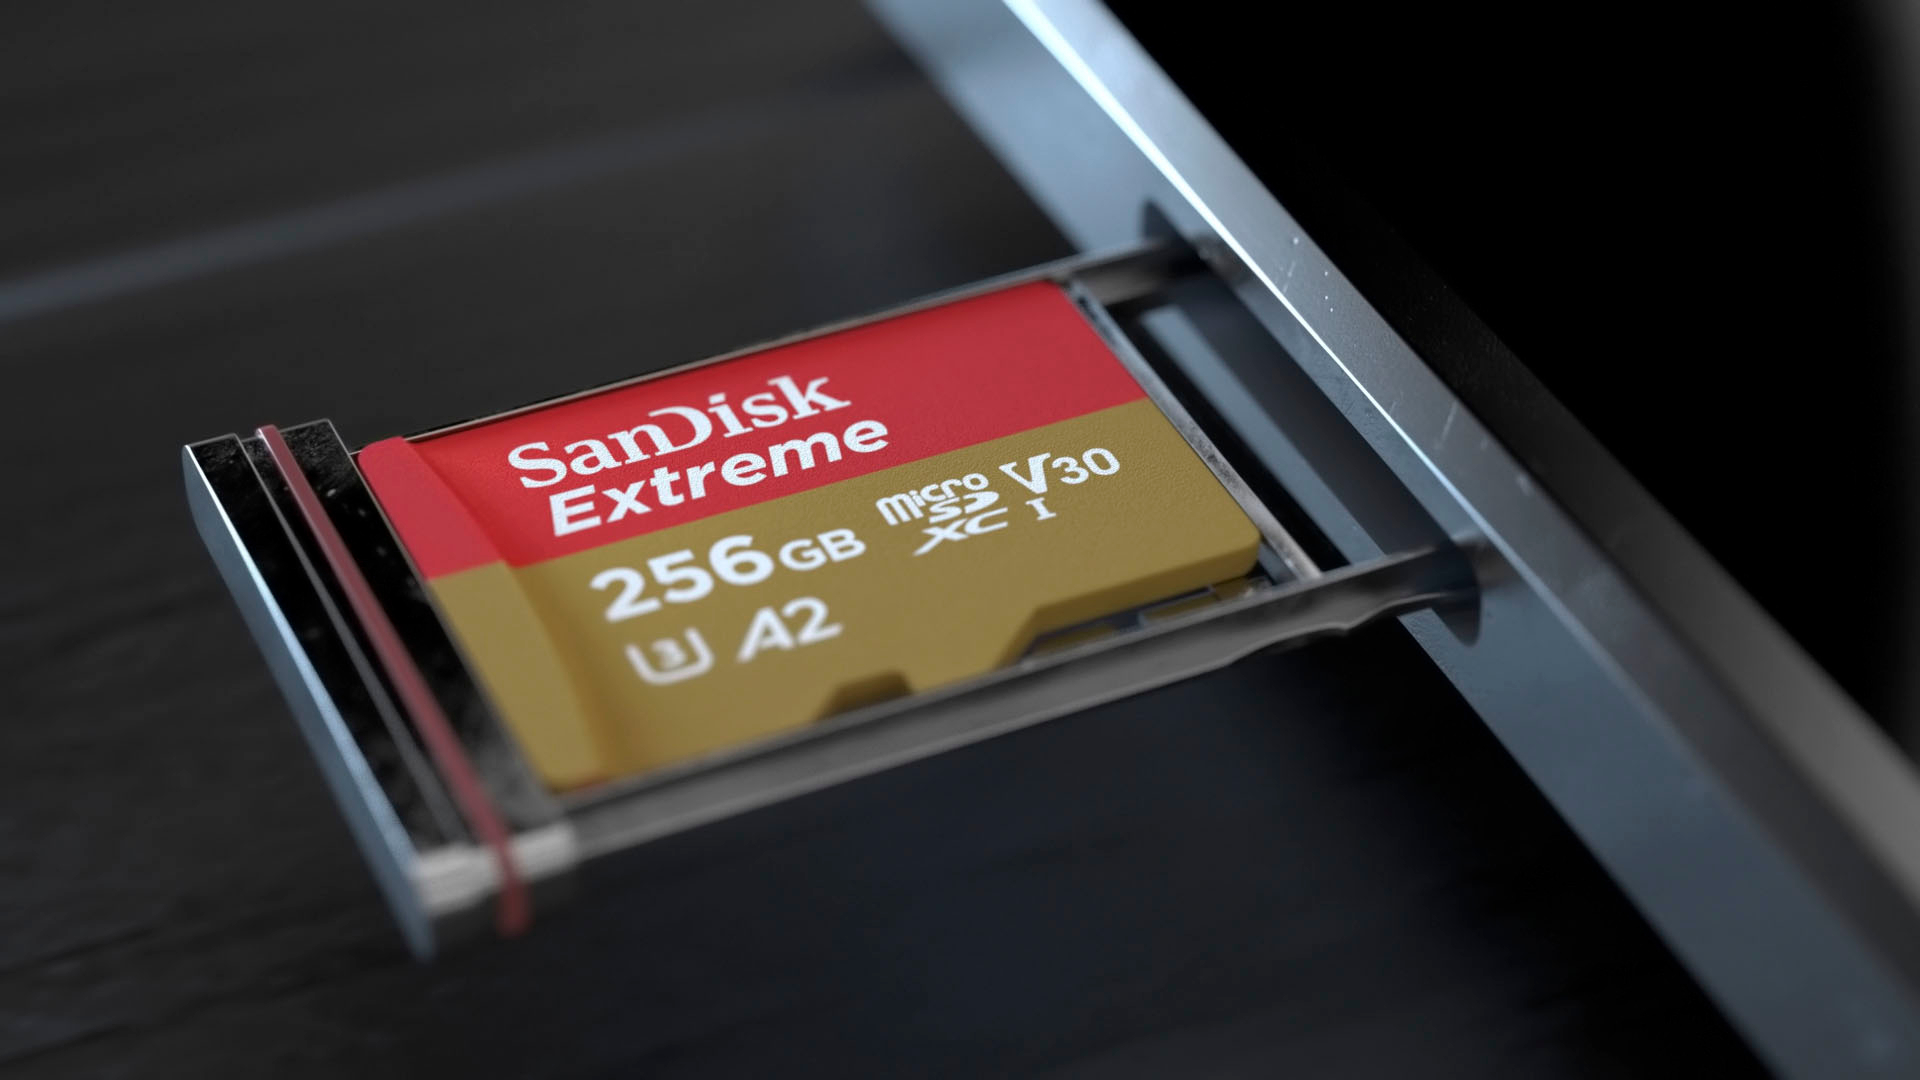 SanDisk Extreme 256GB microSDXC UHS-I Memory Card for Gaming